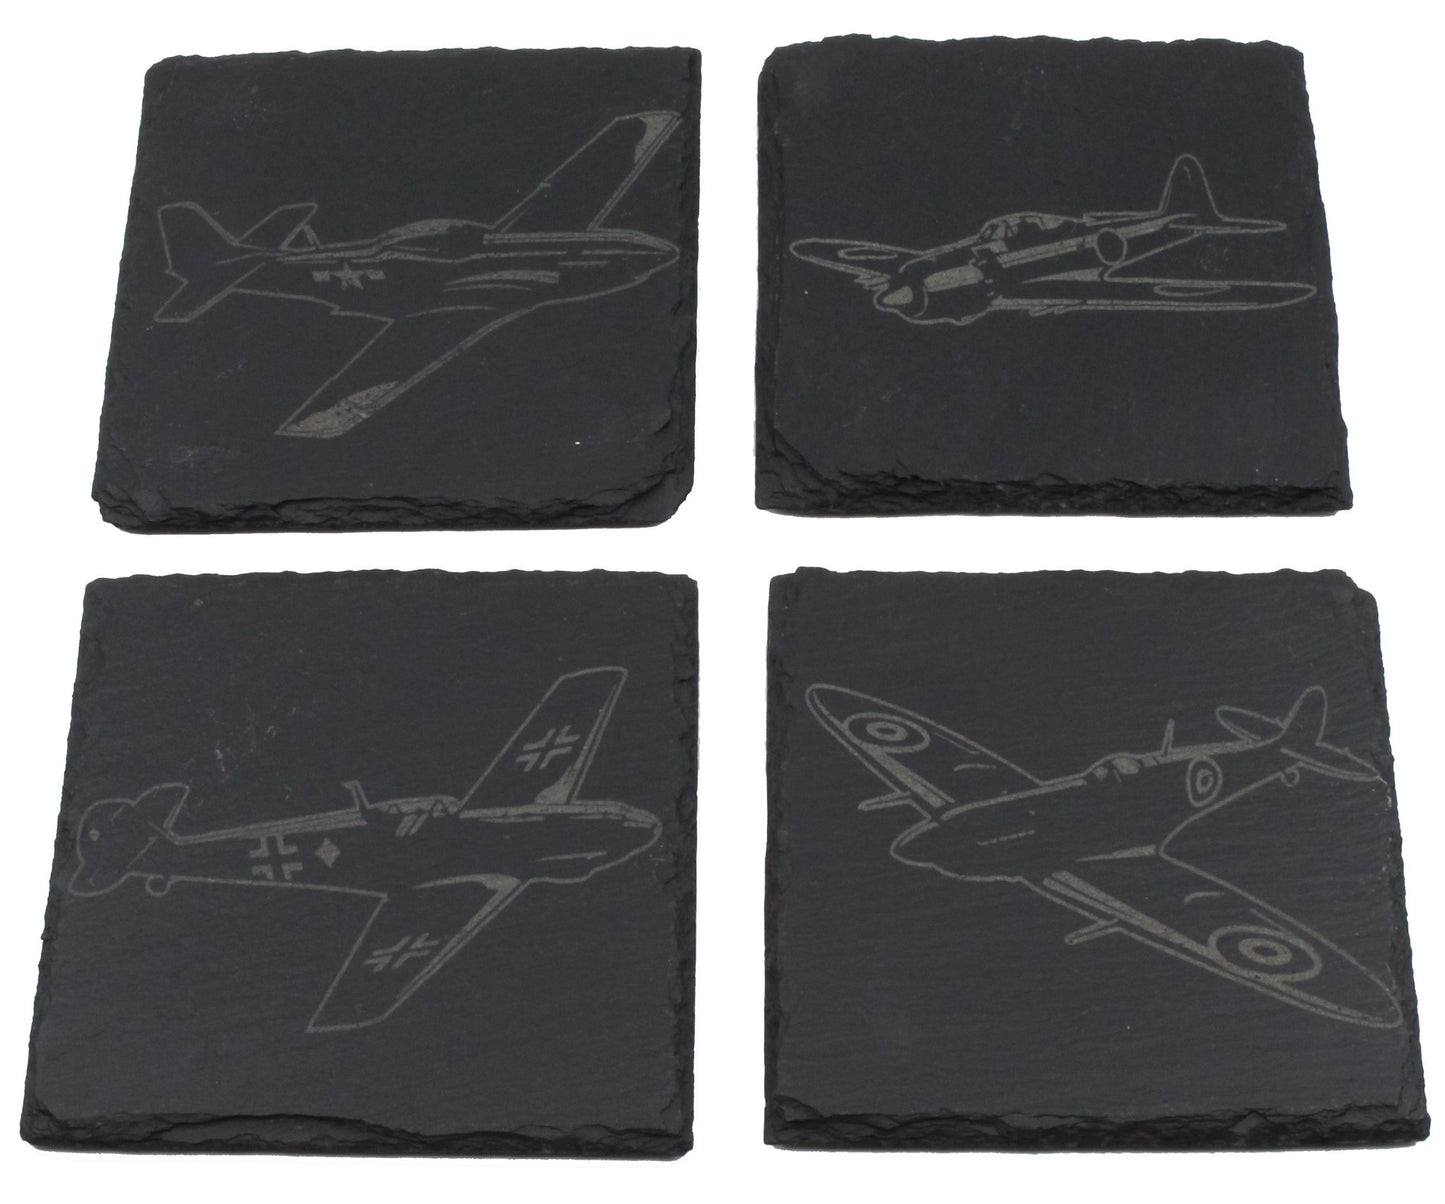 Engraved Slate Coasters - Battlefield Accessories